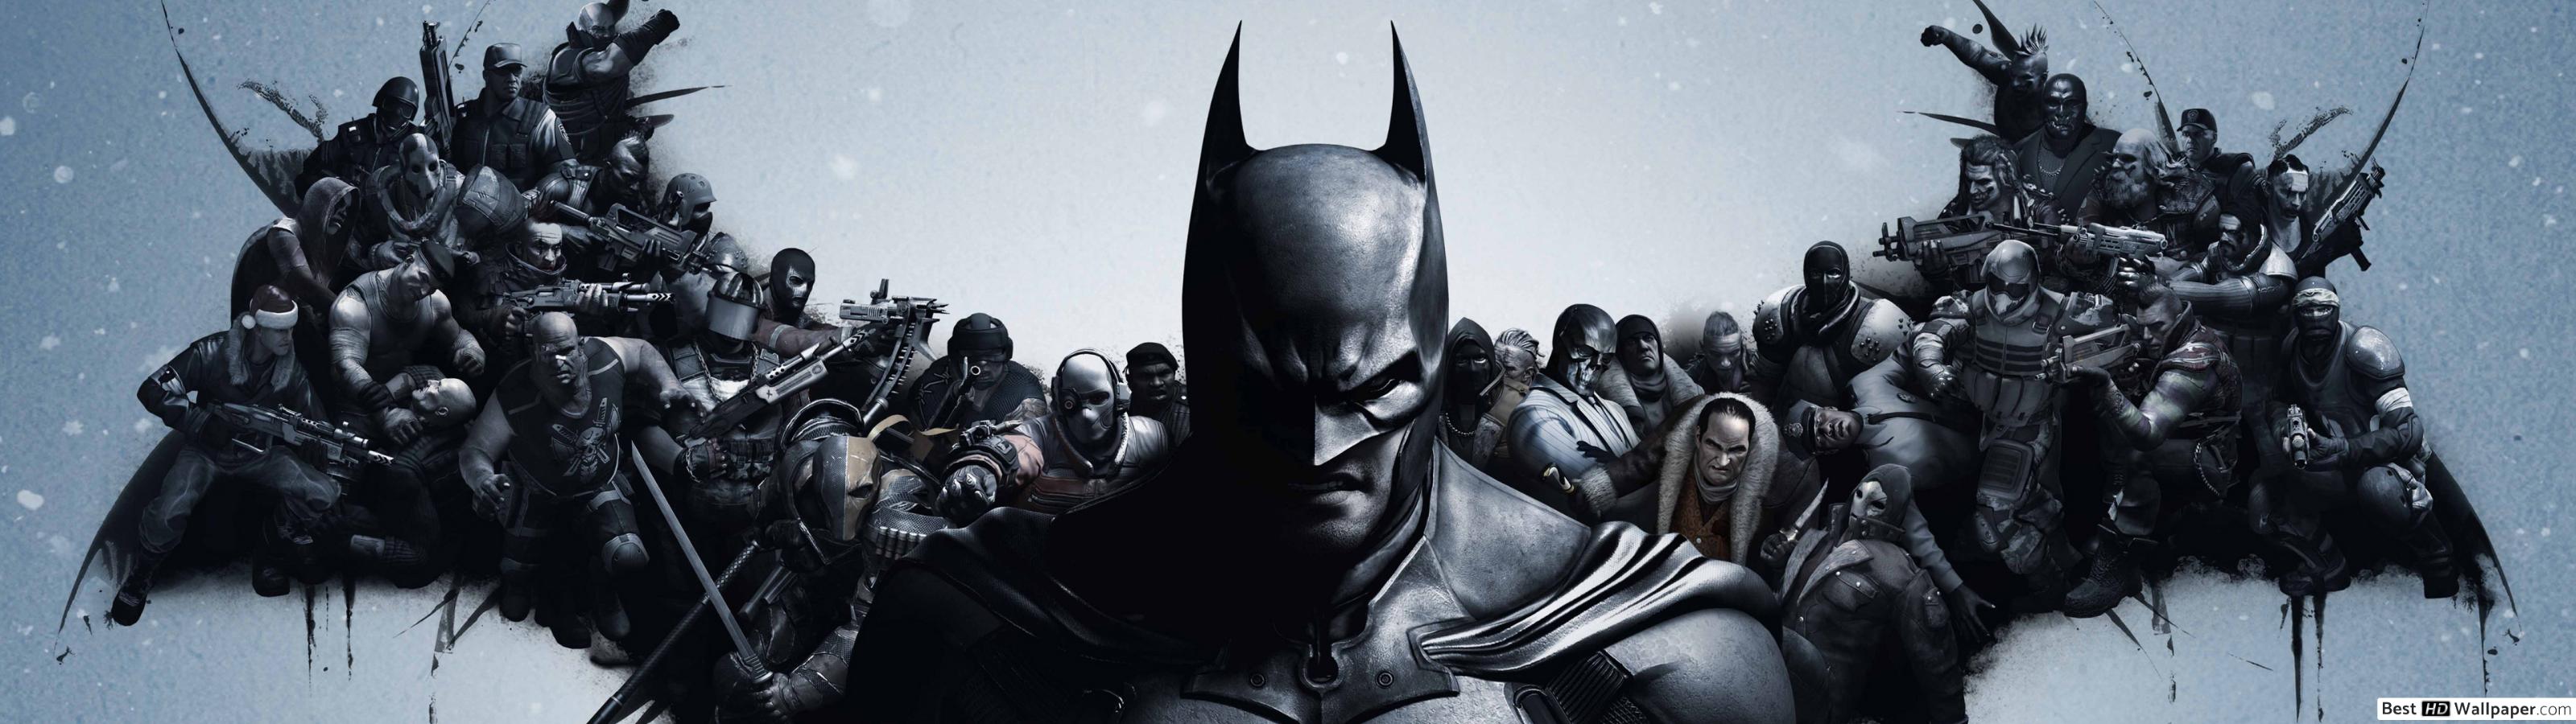 Batman 2021 movie poster HD wallpaper download